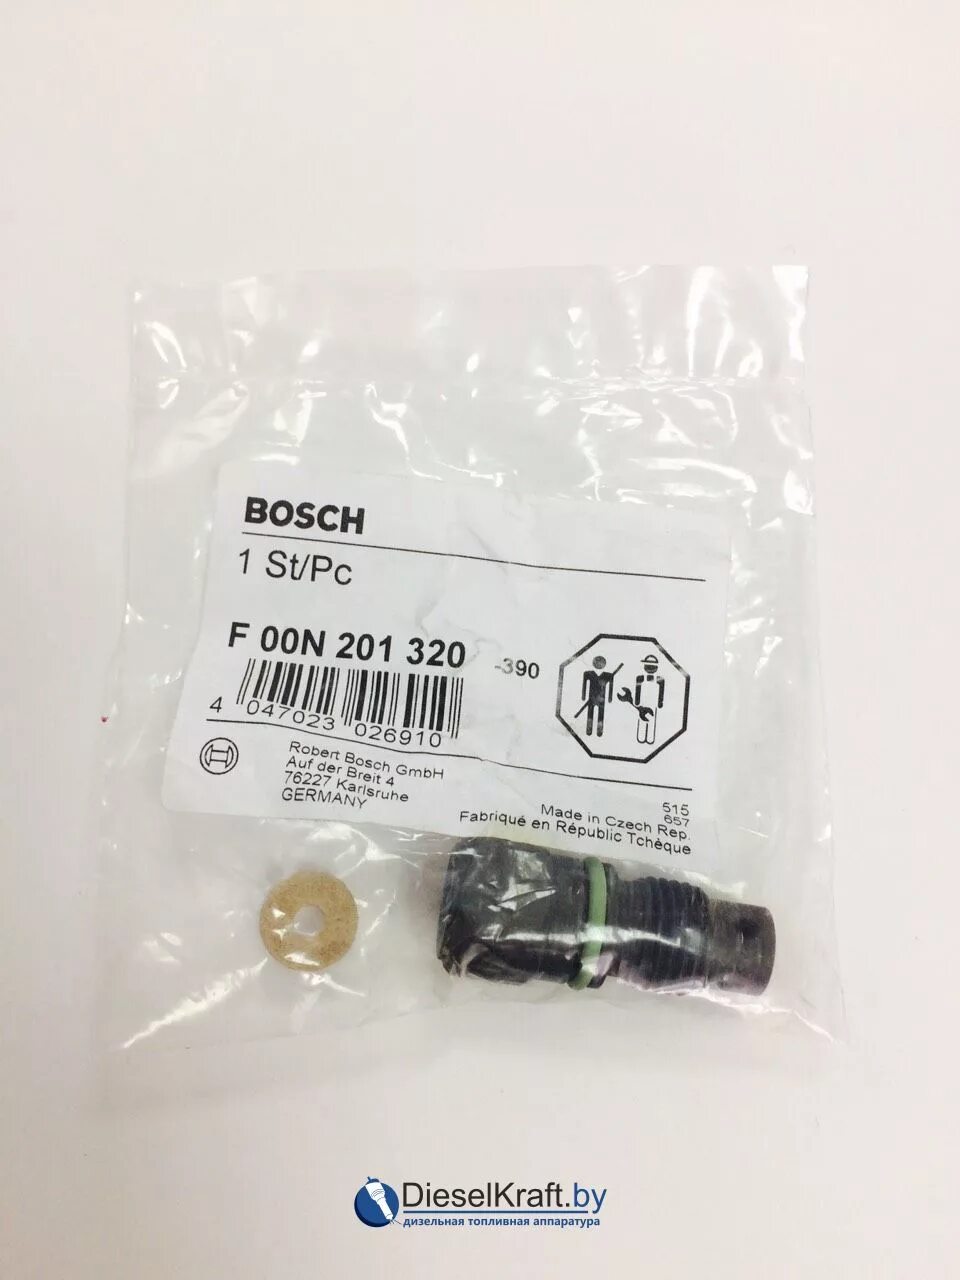 F00n201320 Bosch. F00n202450 перепускной клапан. Клапан Bosch f00n200798. Редукционный клапан — f00n010082.